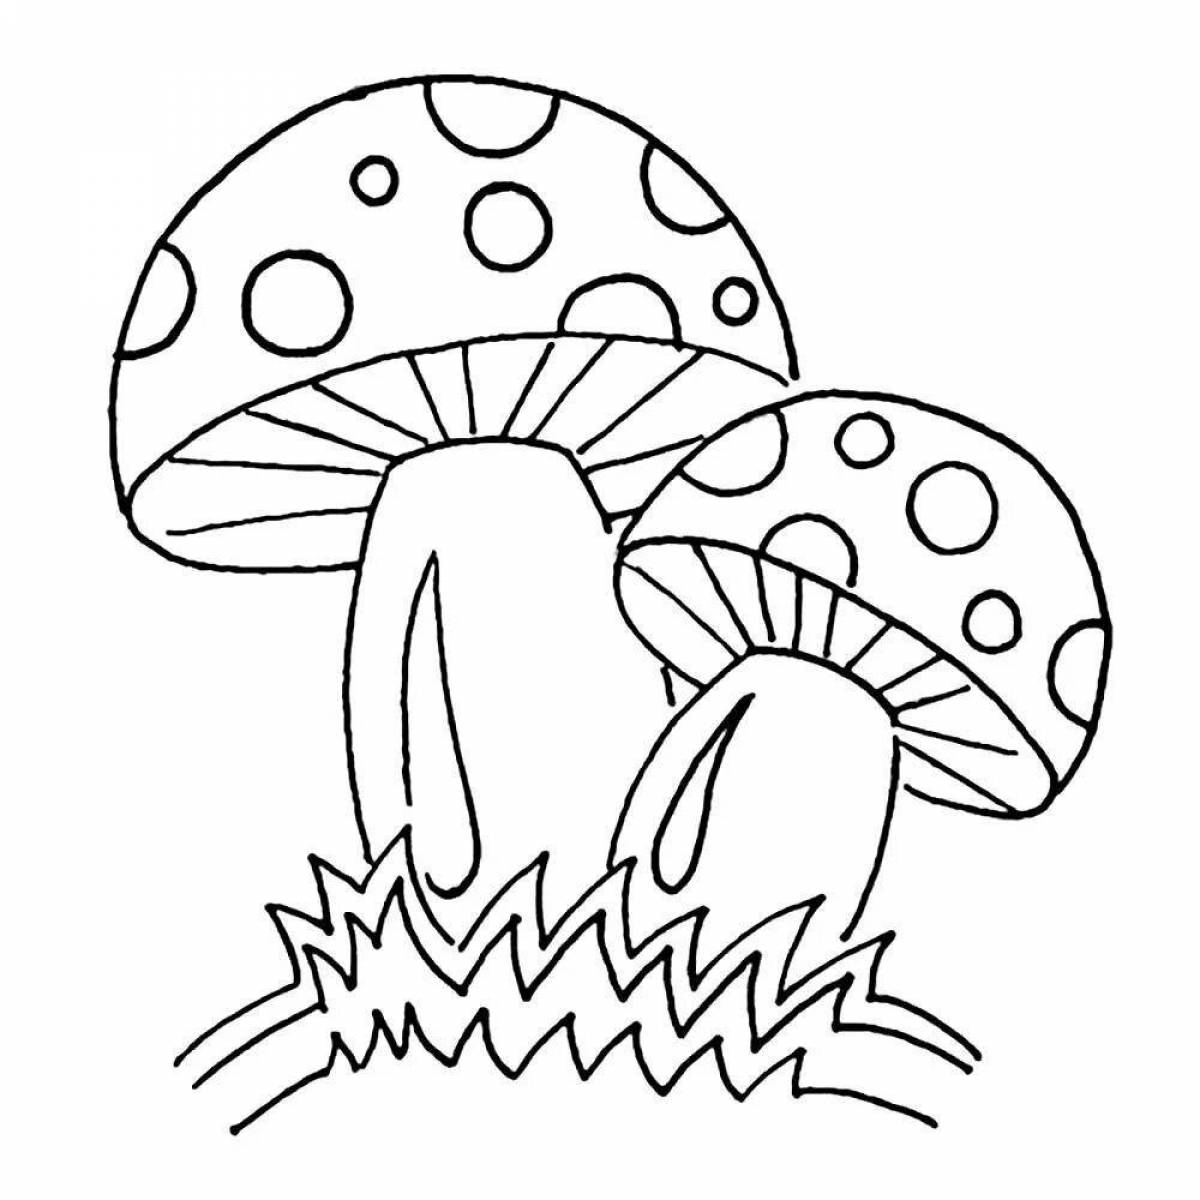 Amazing mushroom coloring page